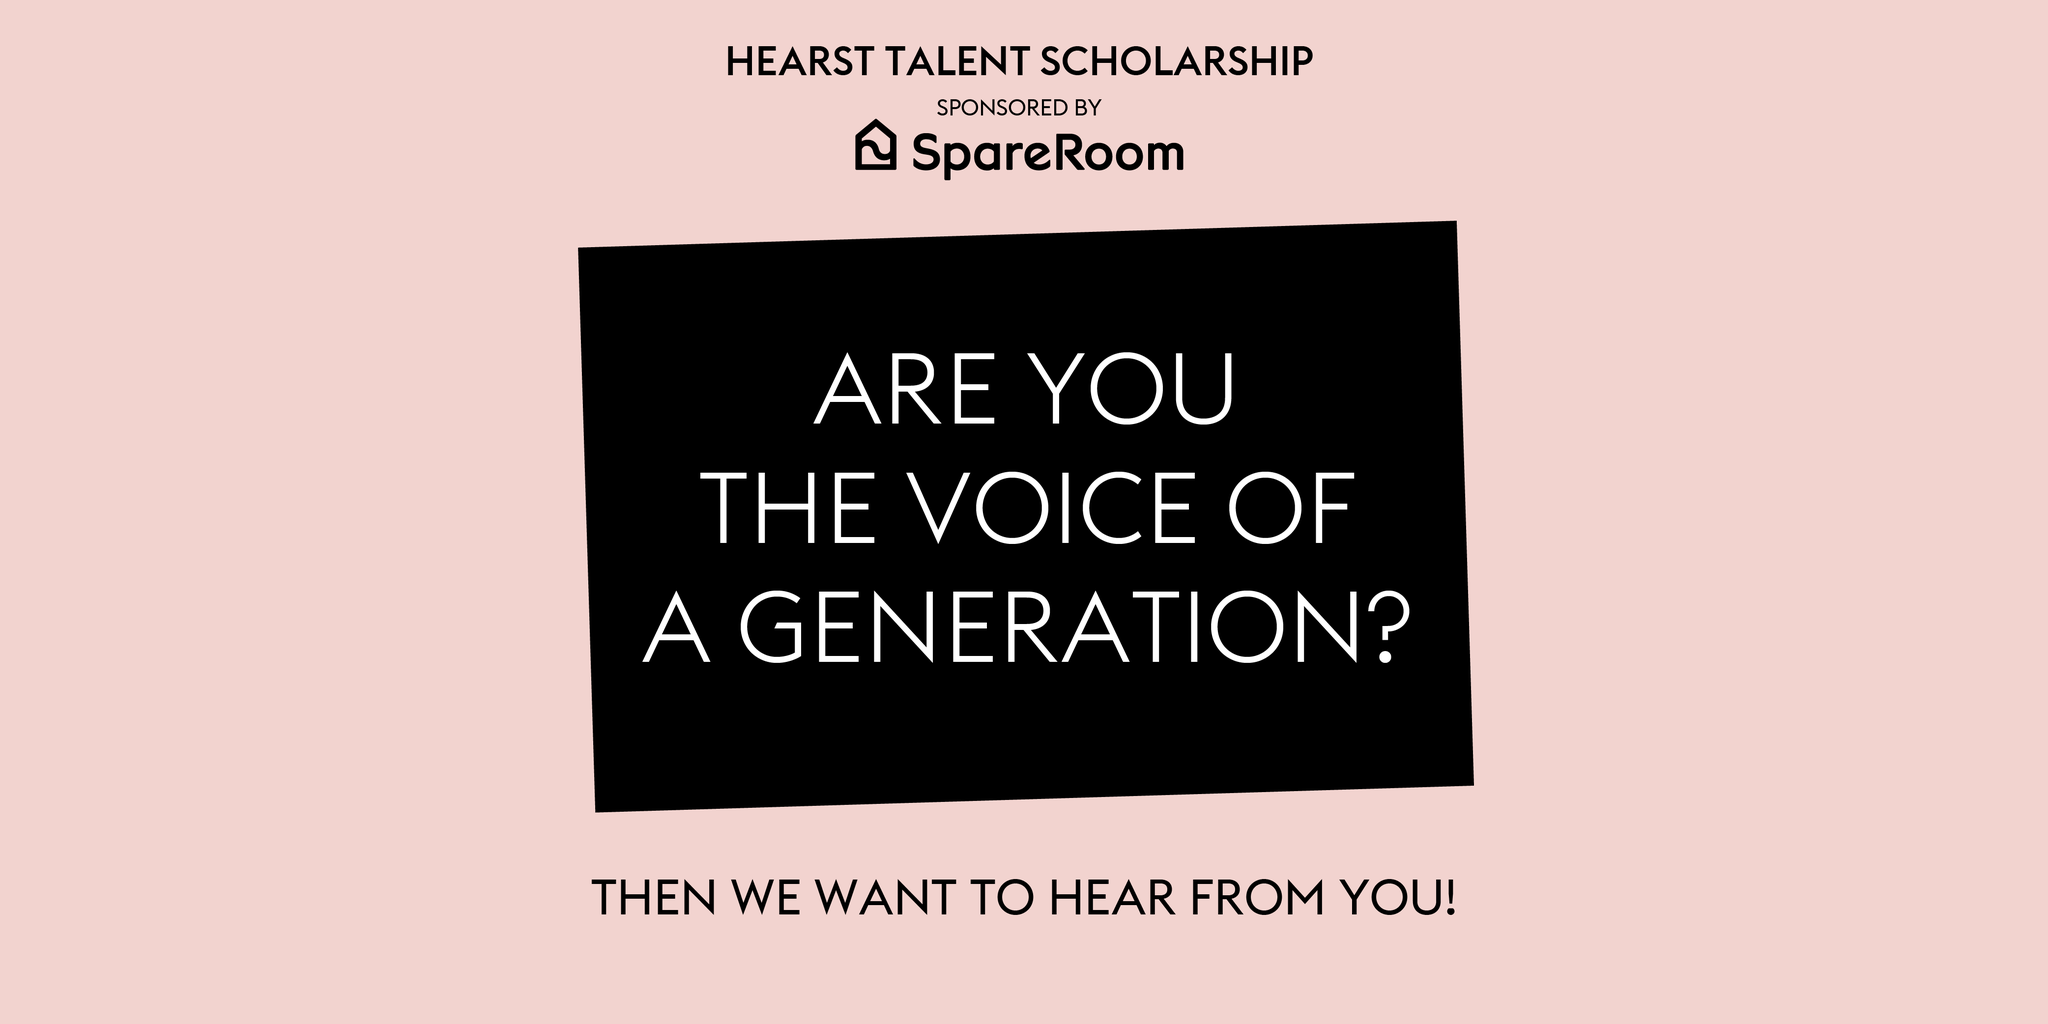 hearst talent scholarship